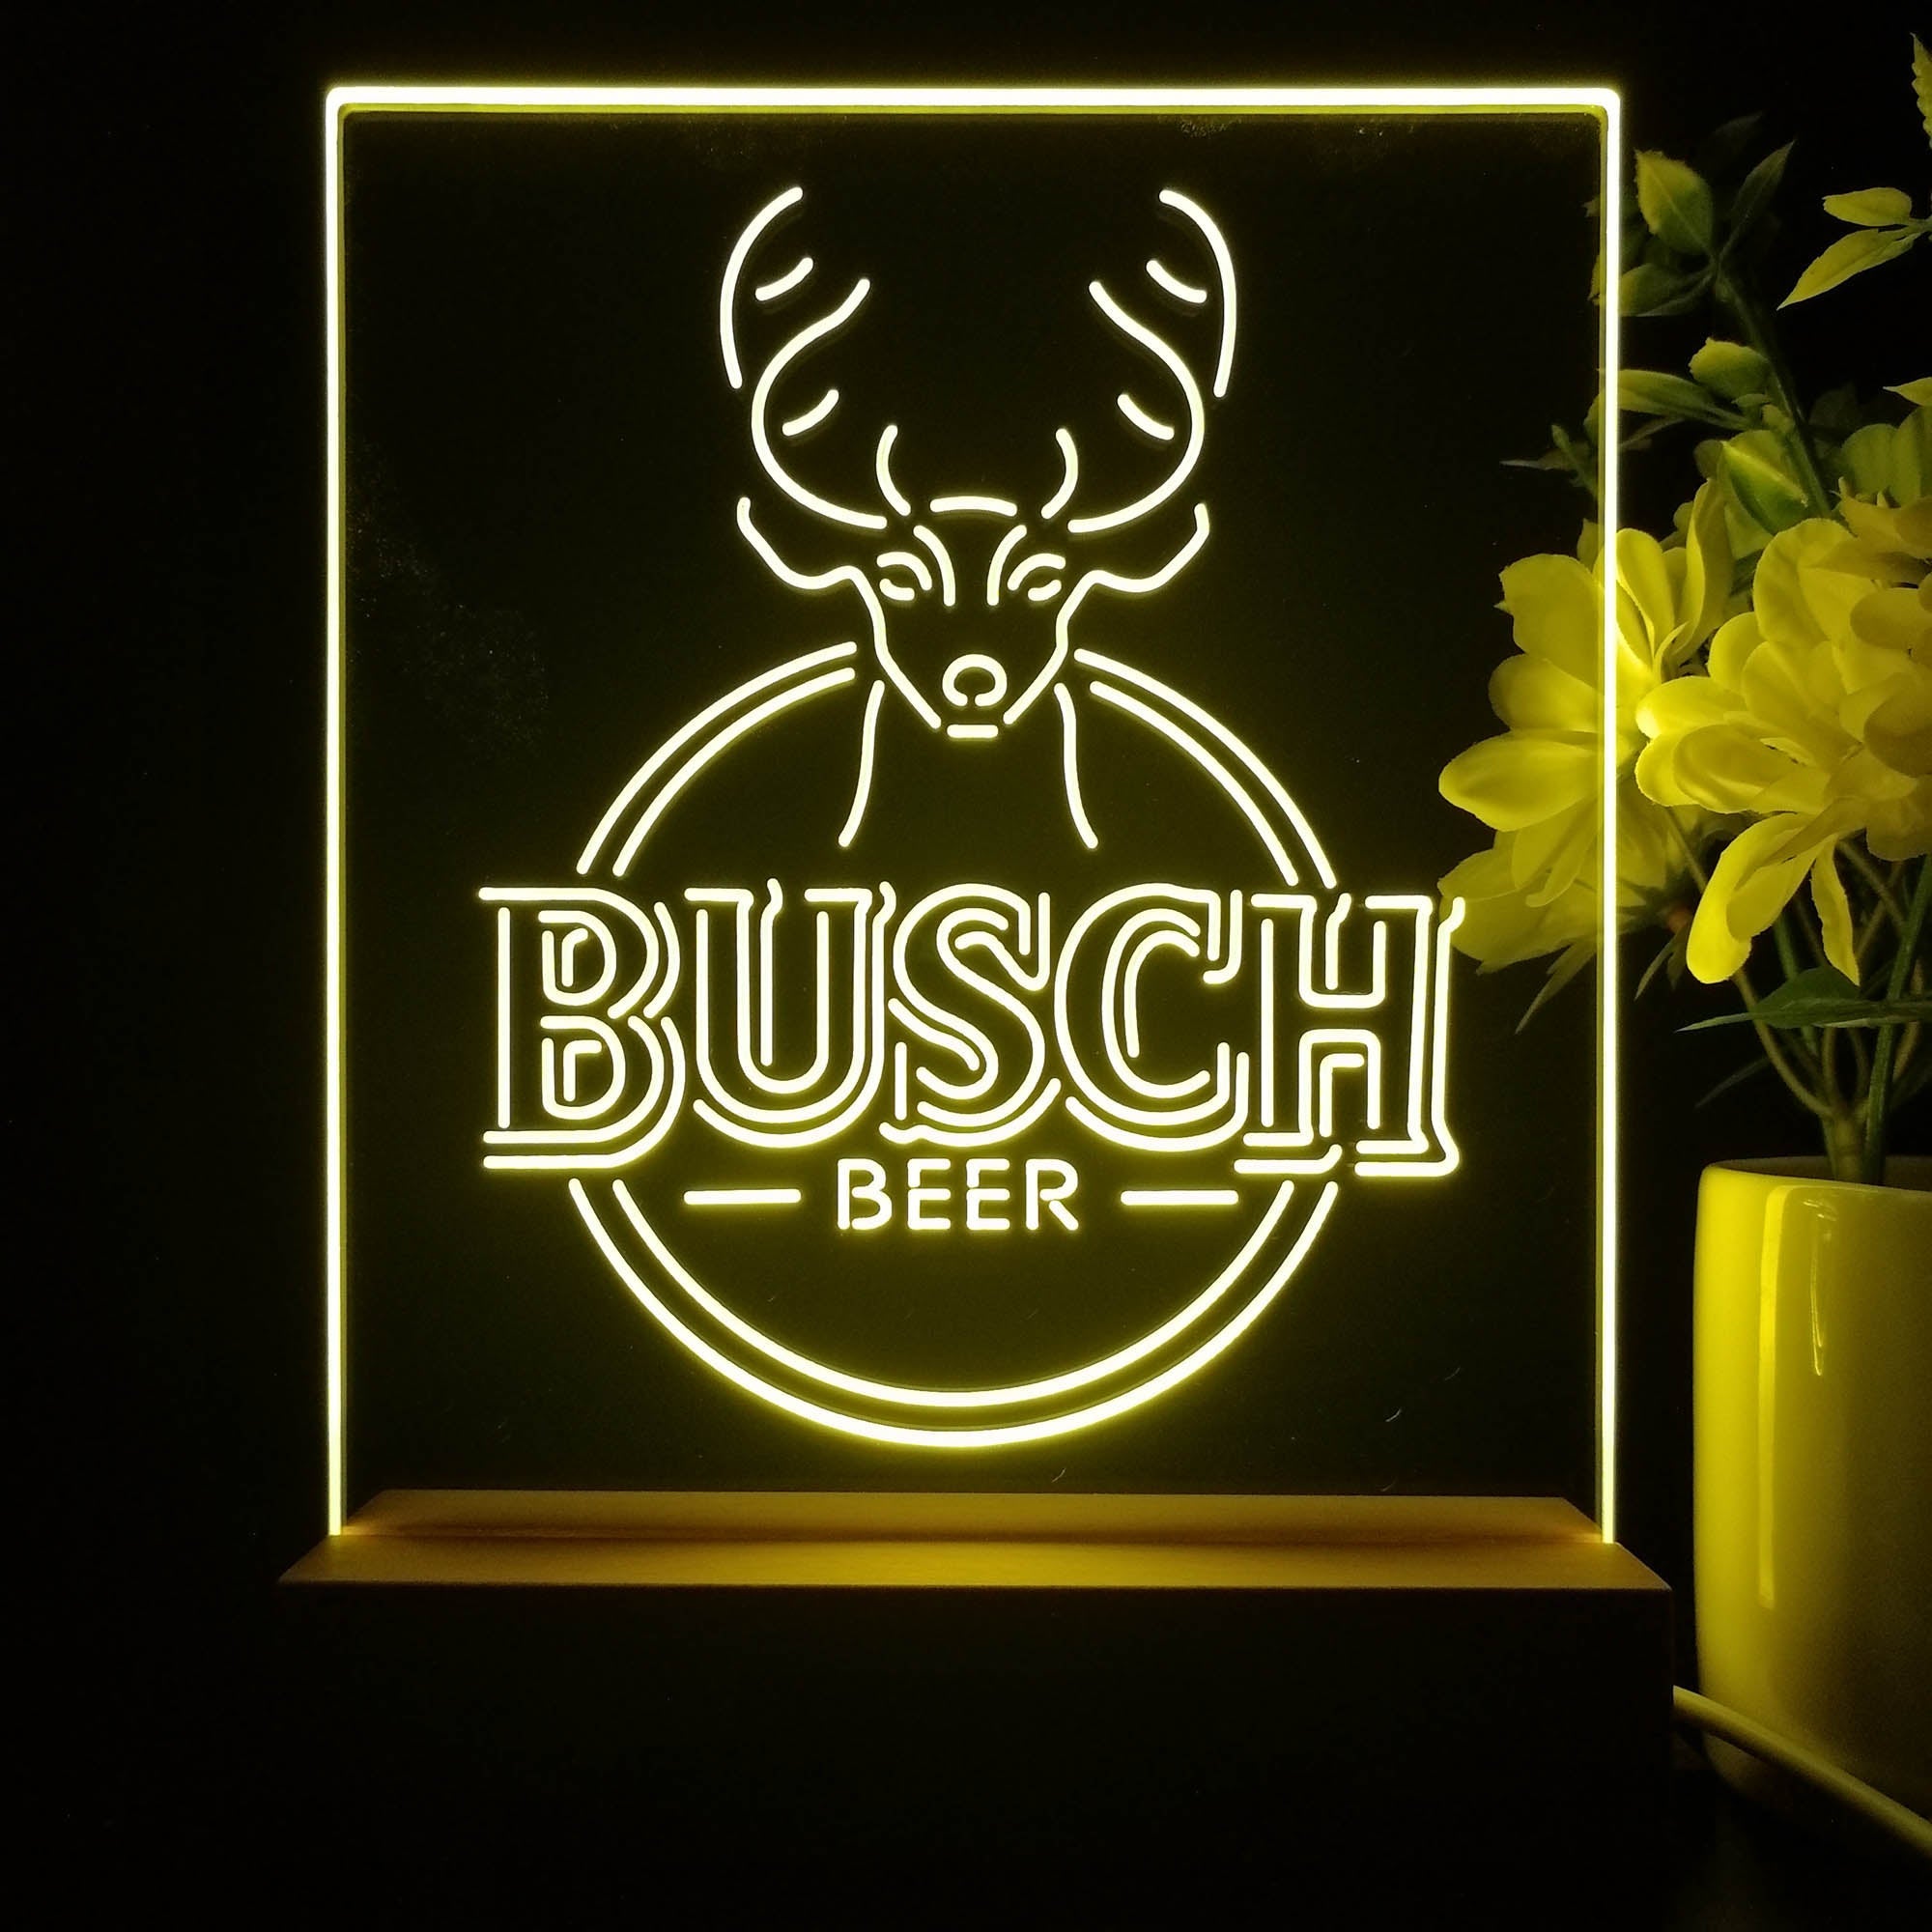 Buschs Beer Deer Night Light Neon Pub Bar Lamp